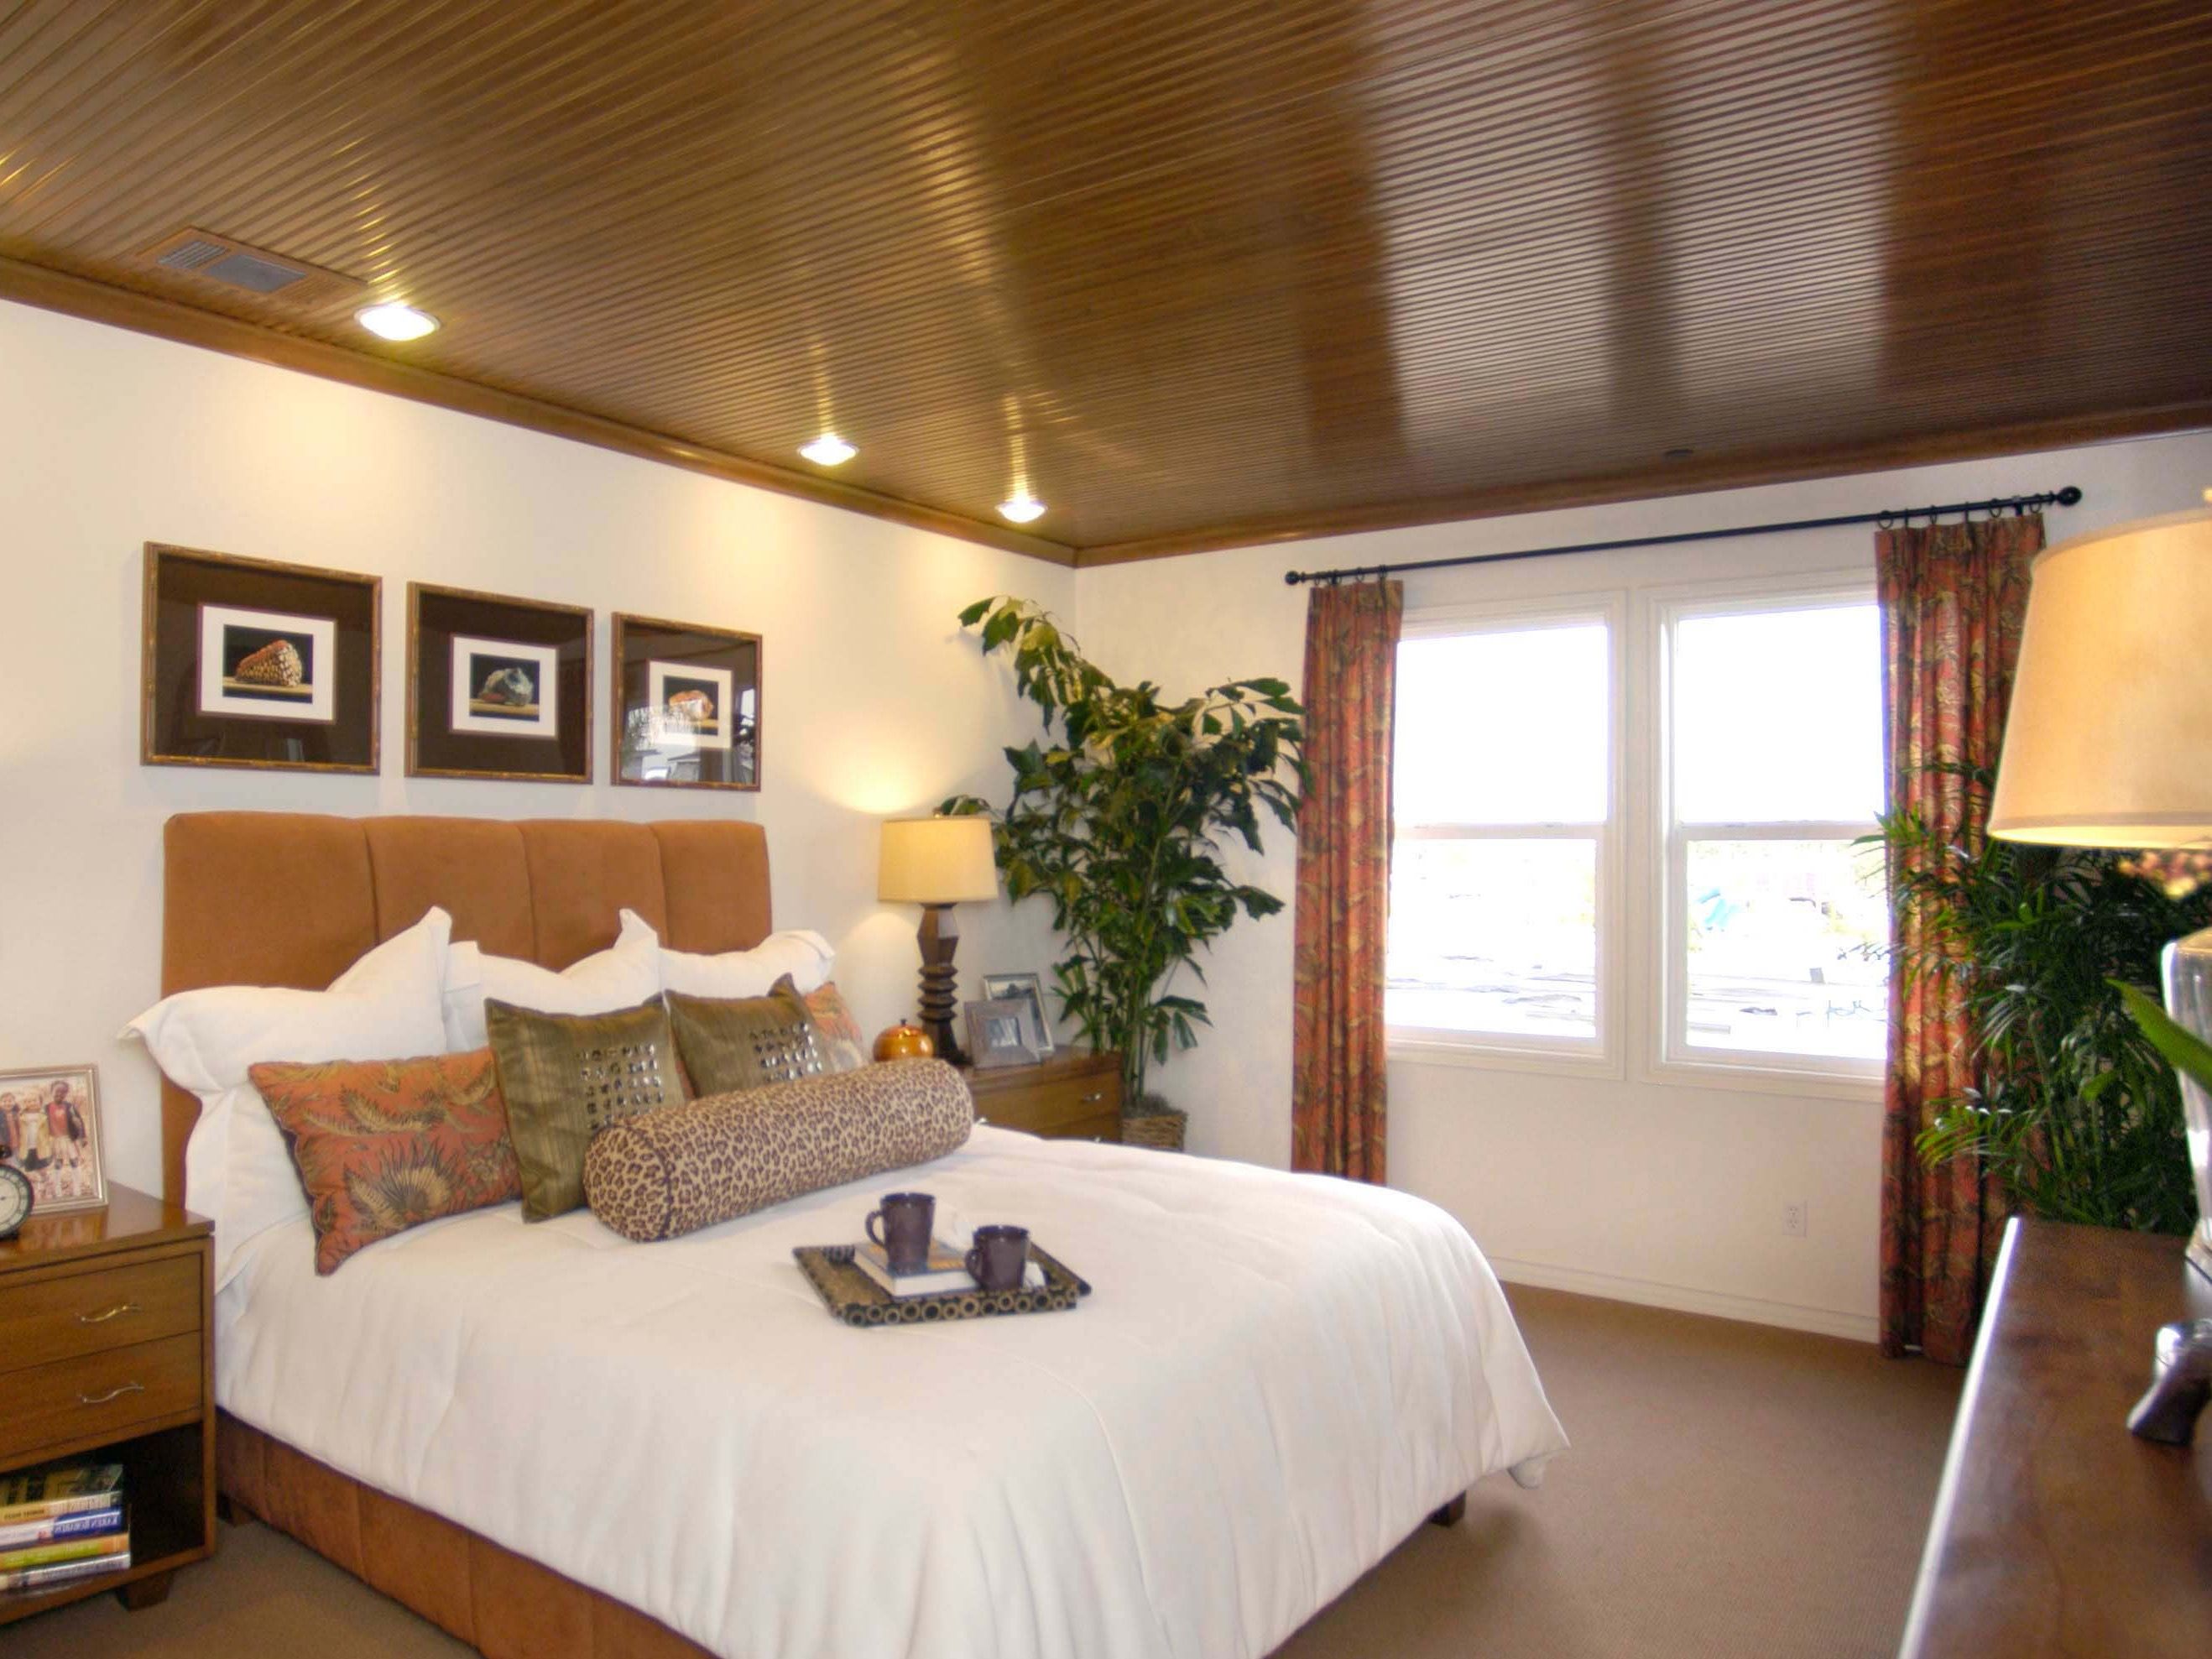 Sleek Bedroom With Hardwood Ceiling (View 22 of 32)